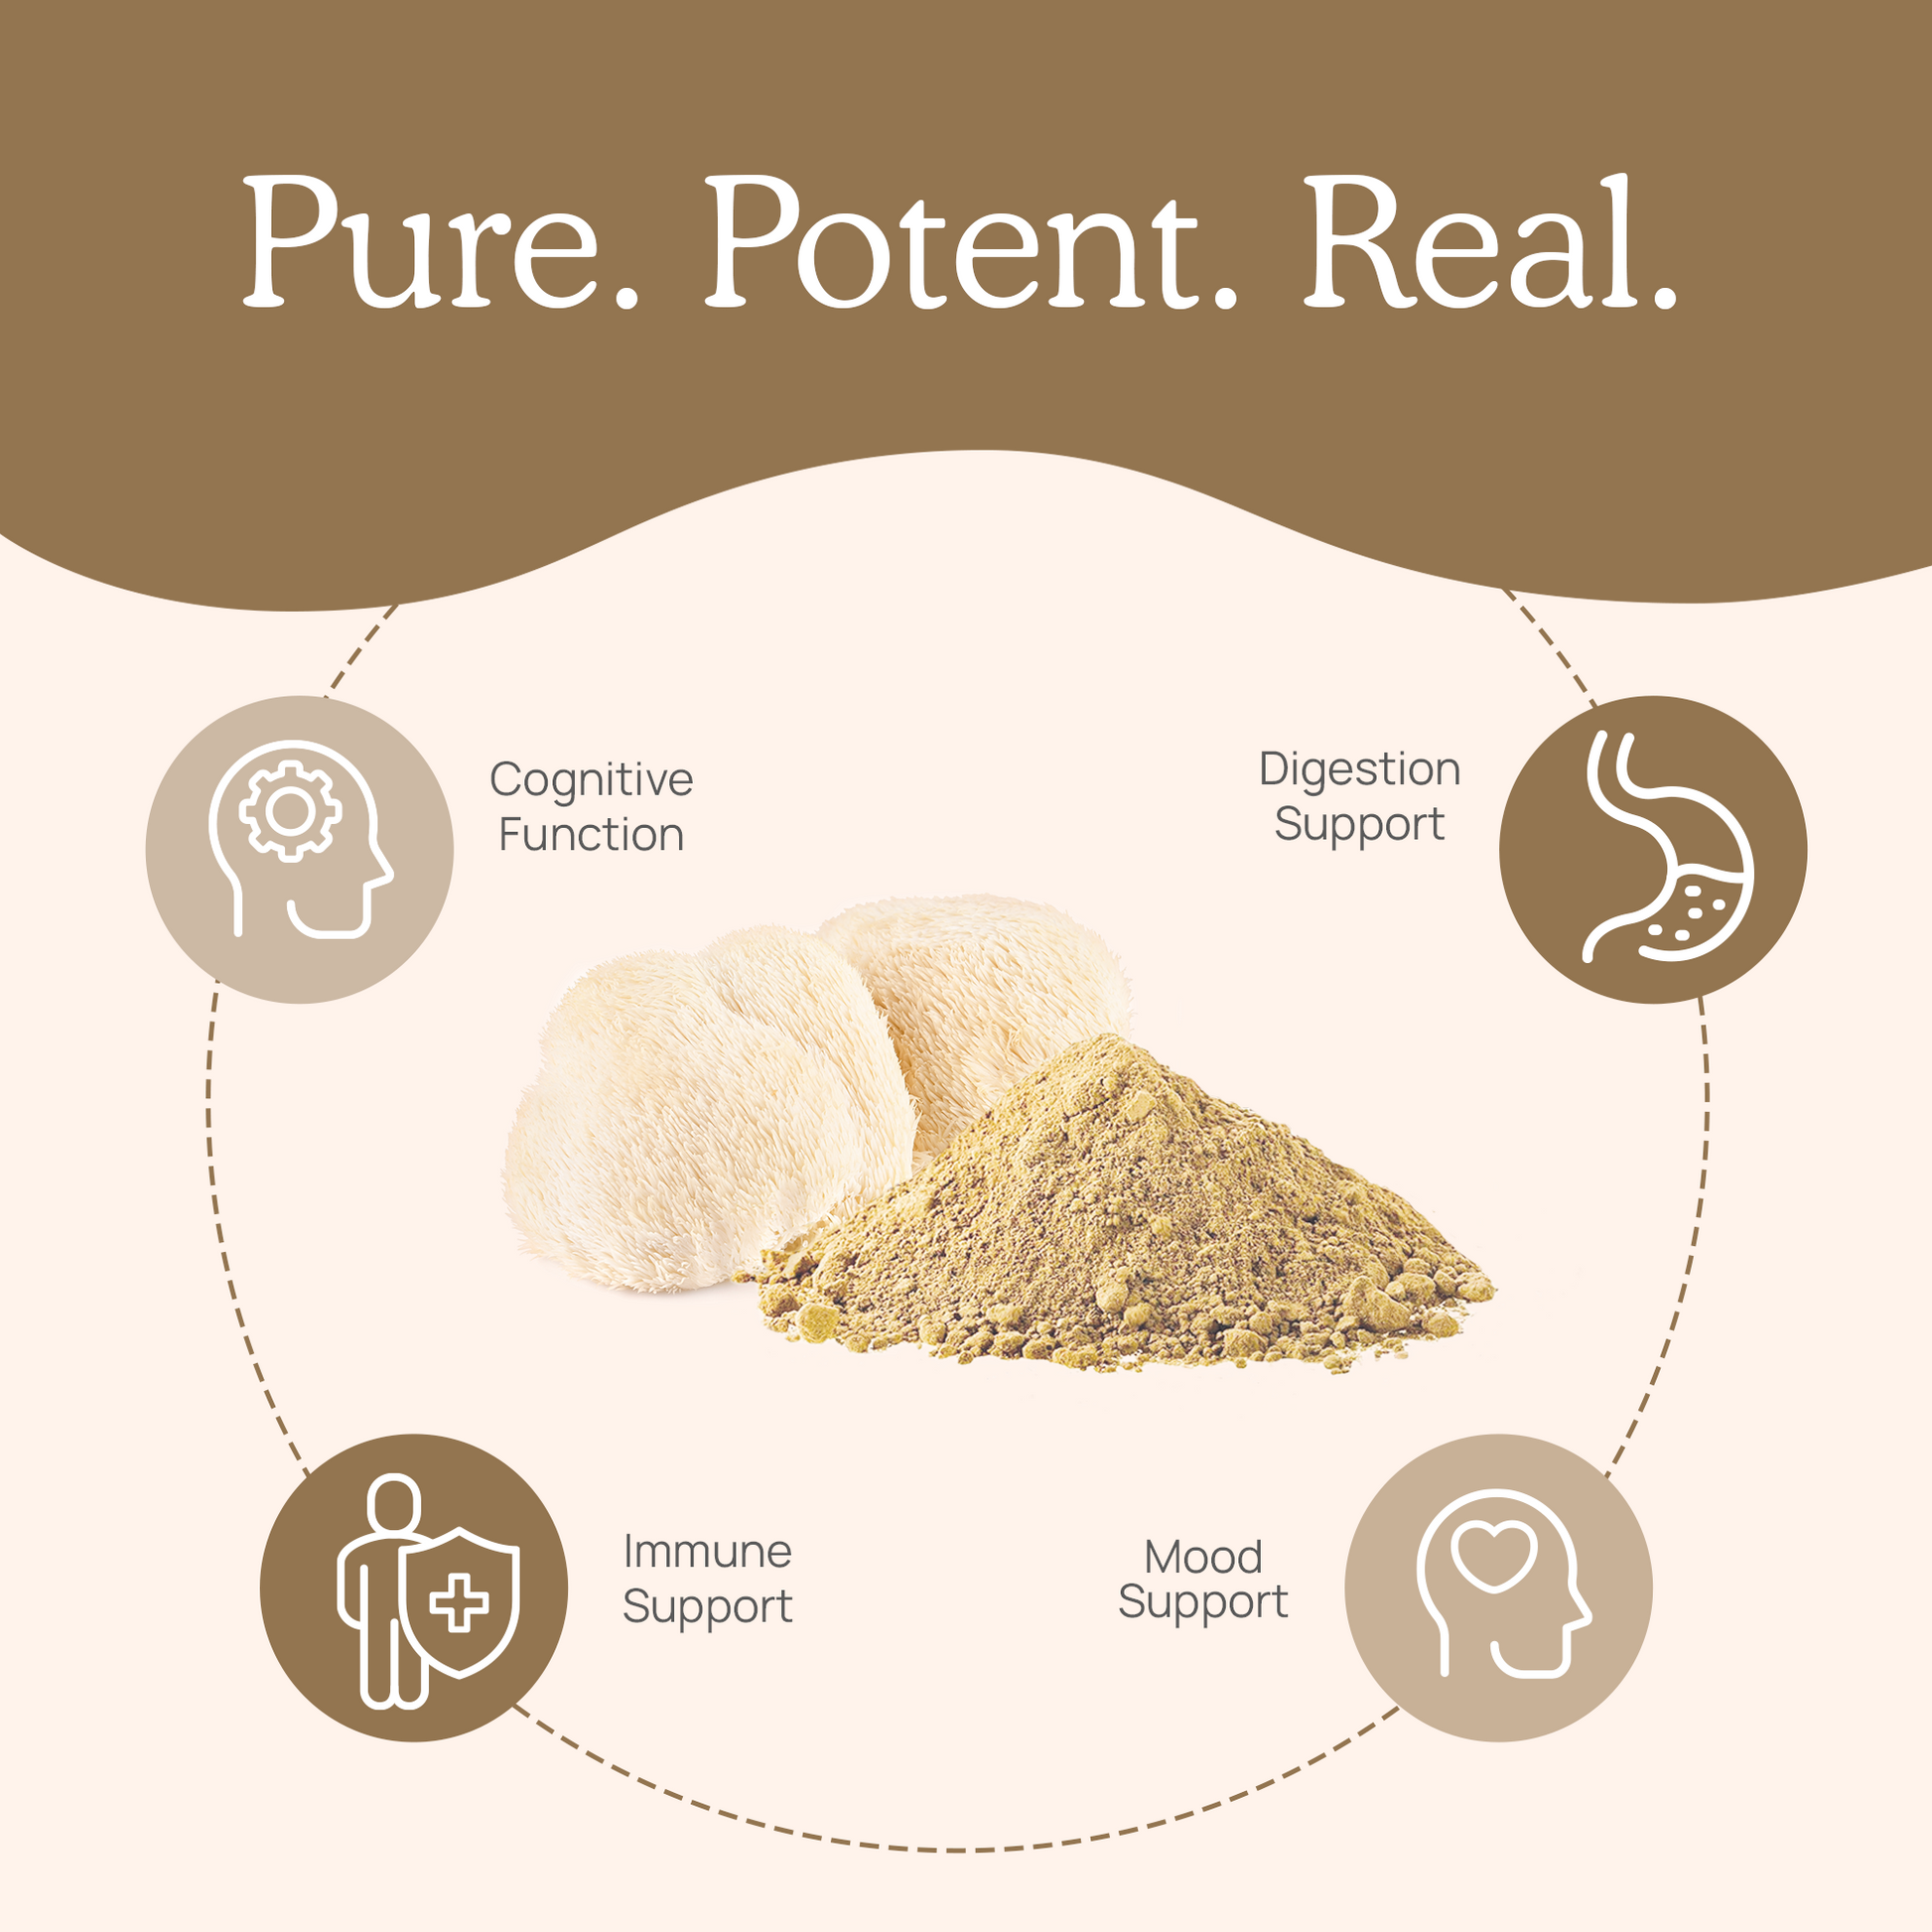 Real Mushrooms' Organic Lions Mane Mushroom Powder – Bulk Extract is pure, potent, and real.